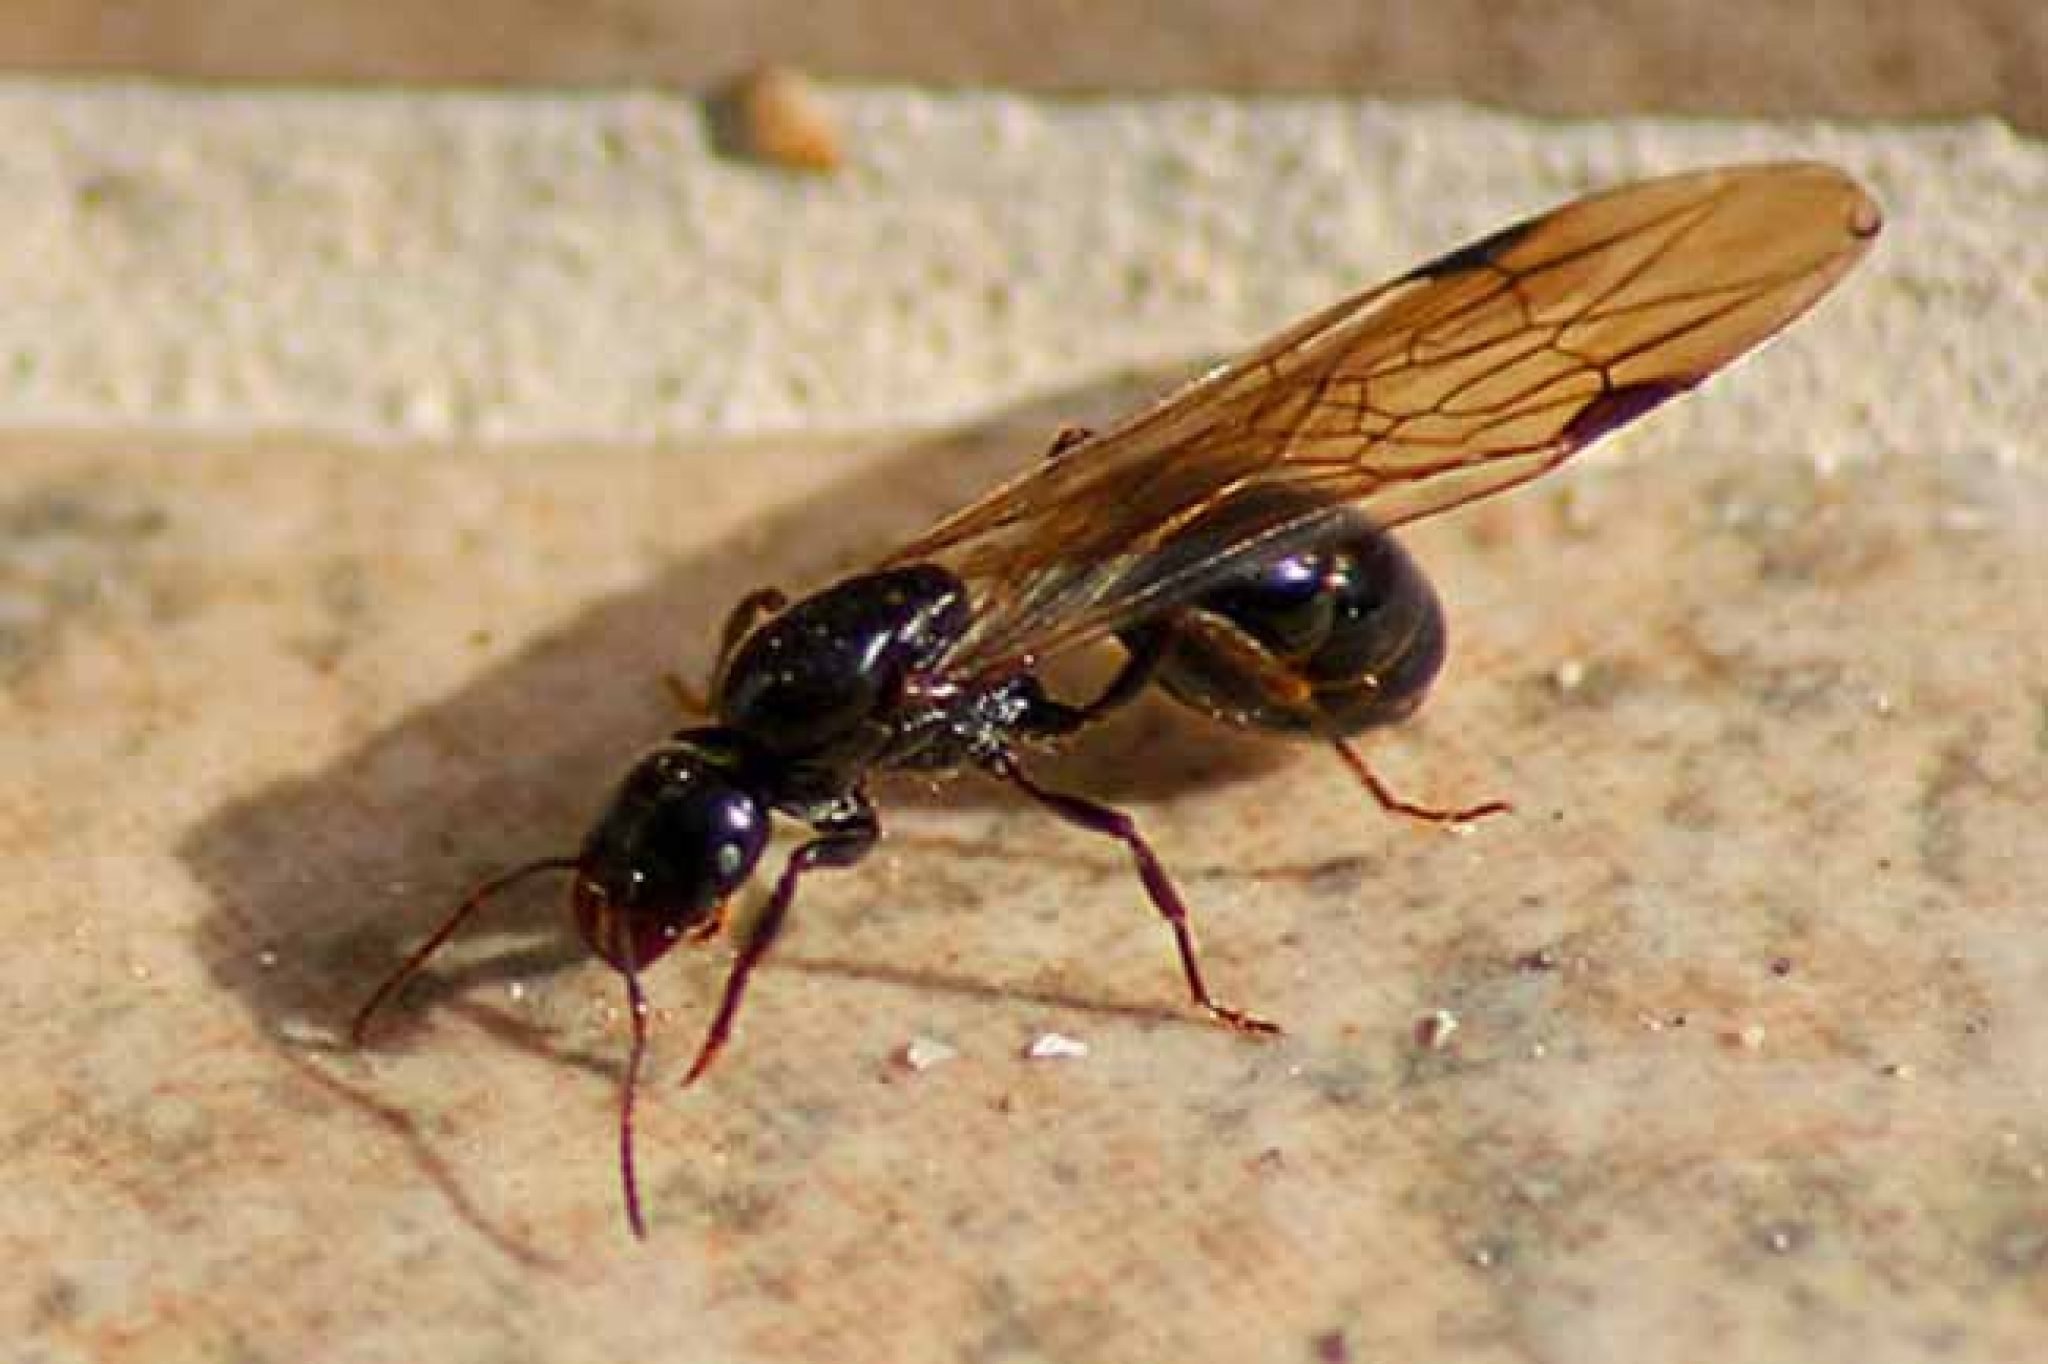 Крылатых муравьев. Муравьи с крыльями. Муравьиная матка с крыльями. Большие муравьи с крыльями. Летающее насекомое похожее на муравья.